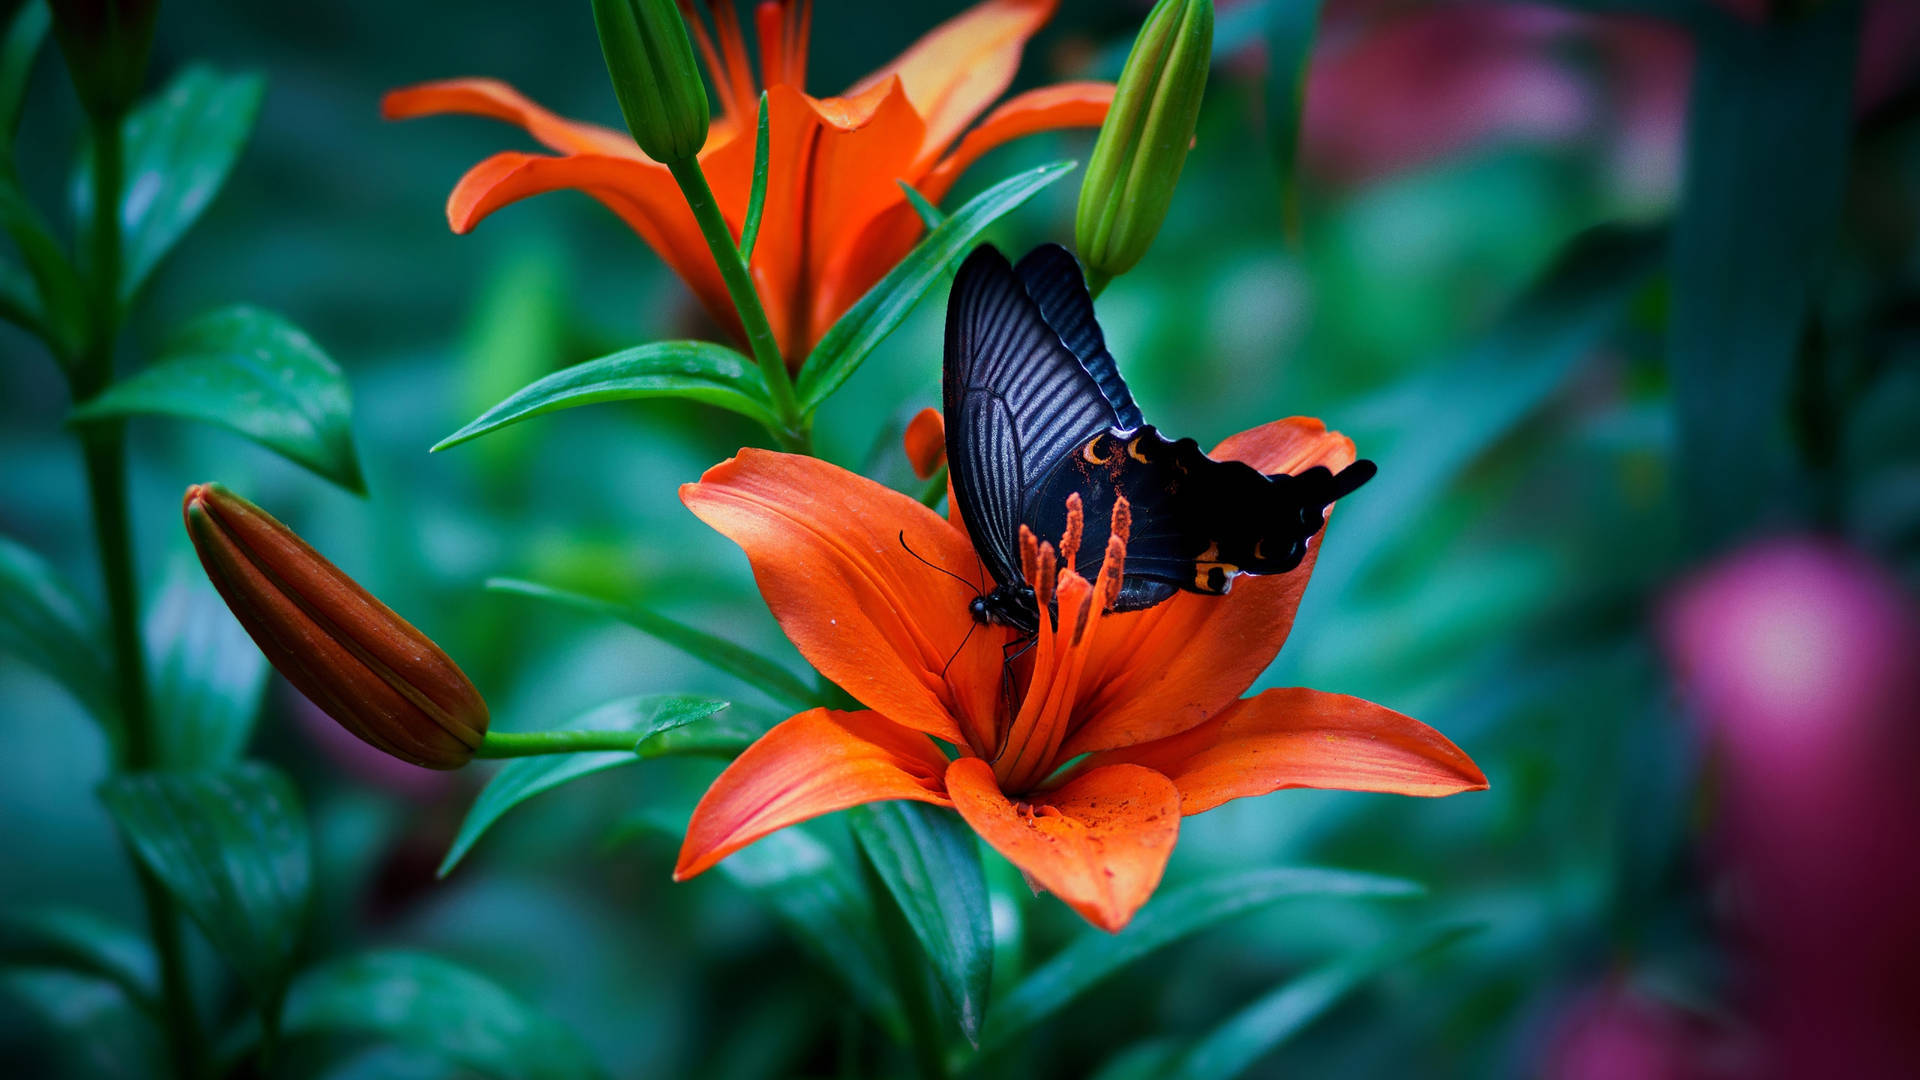 Black Spangle Butterfly On Flower Wallpaper